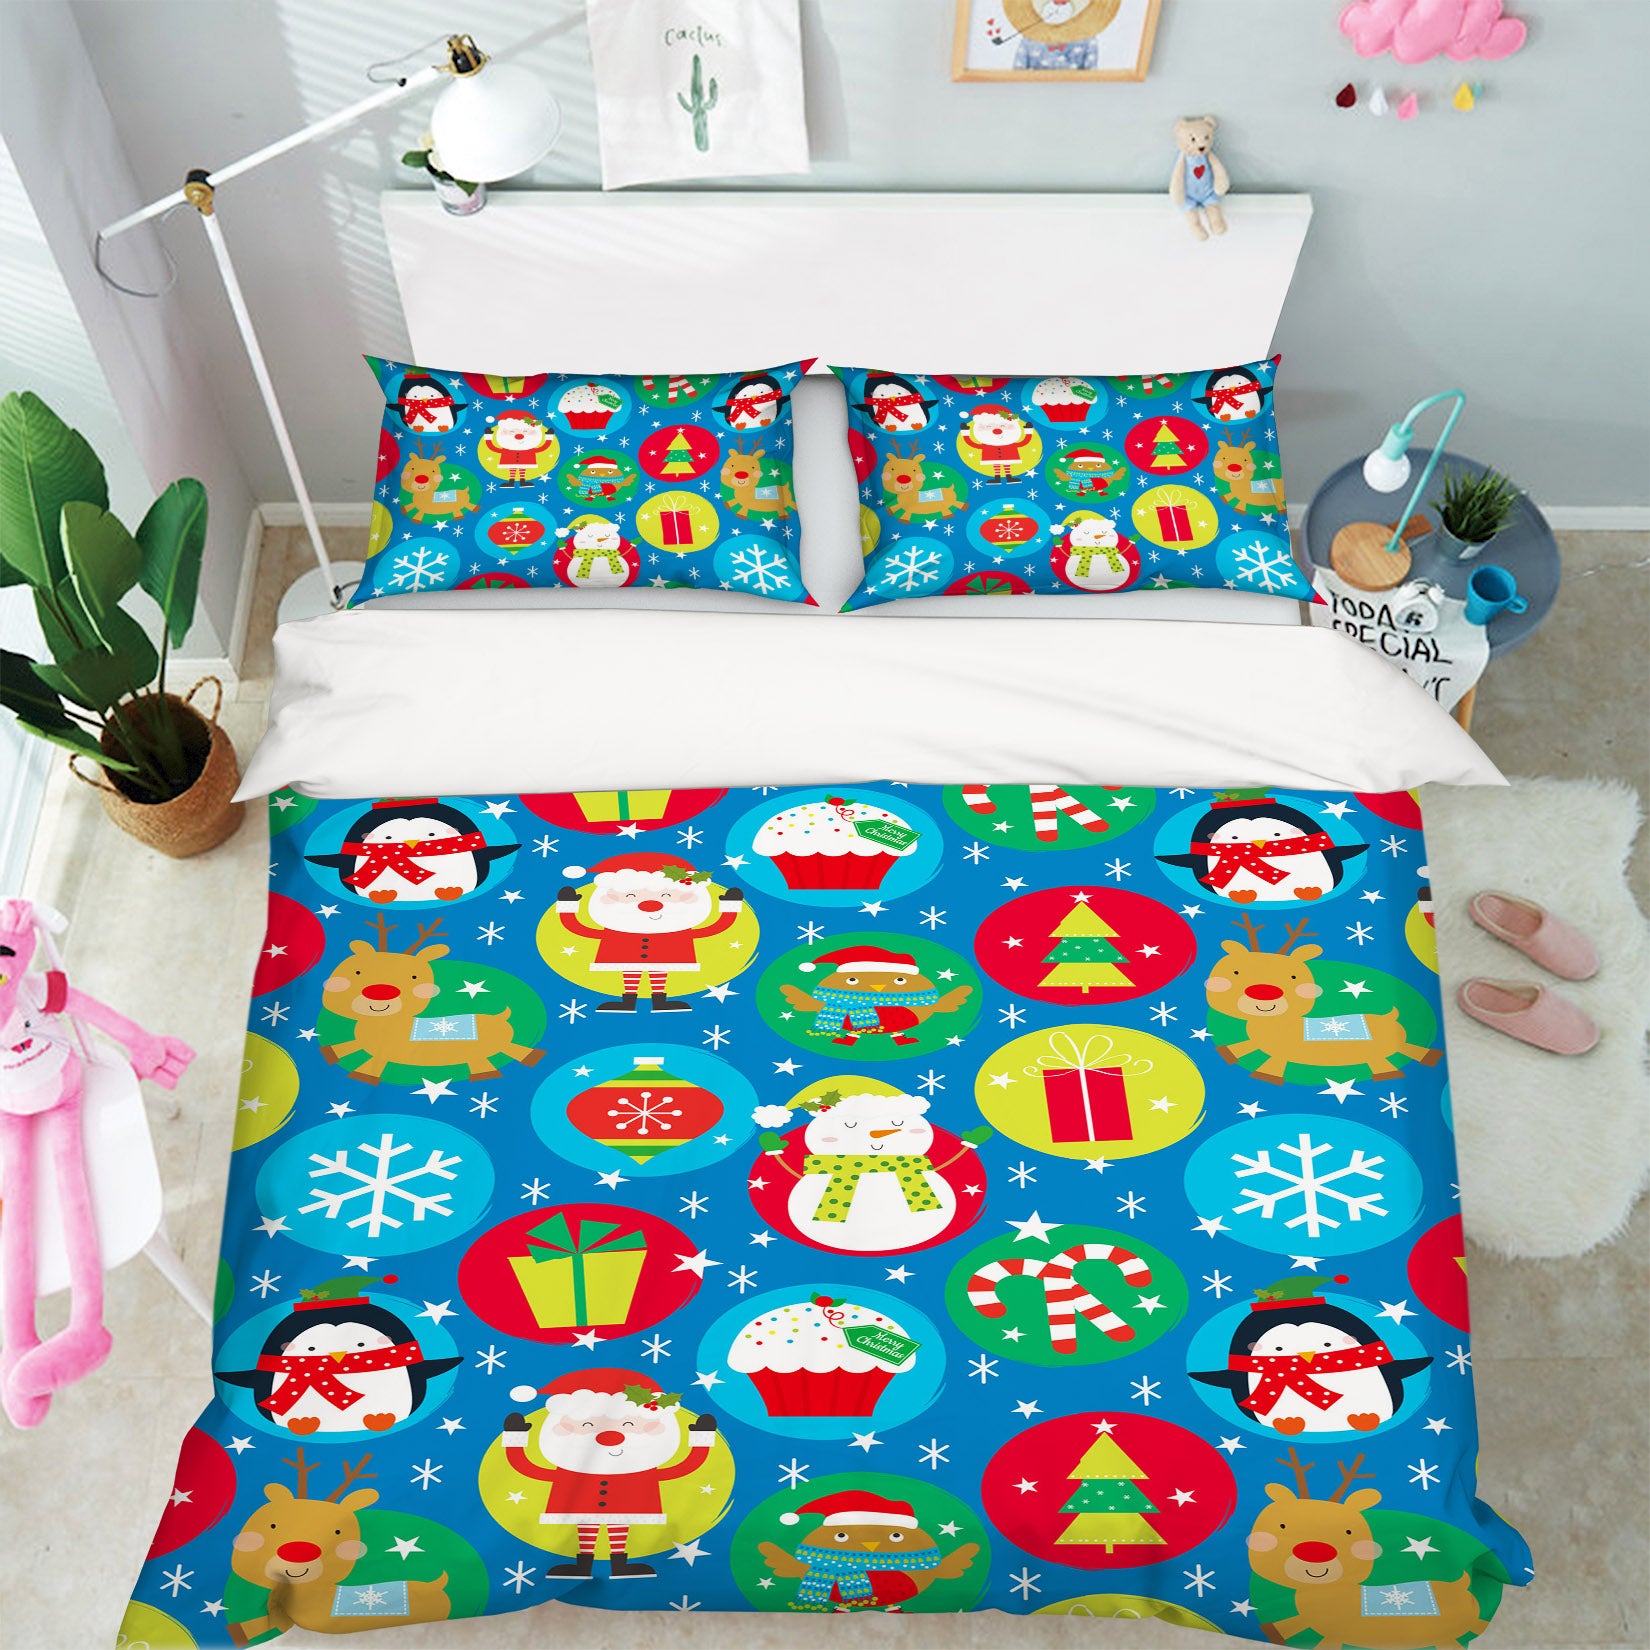 3D Snowman Santa Claus Circle Pattern 51149 Christmas Quilt Duvet Cover Xmas Bed Pillowcases